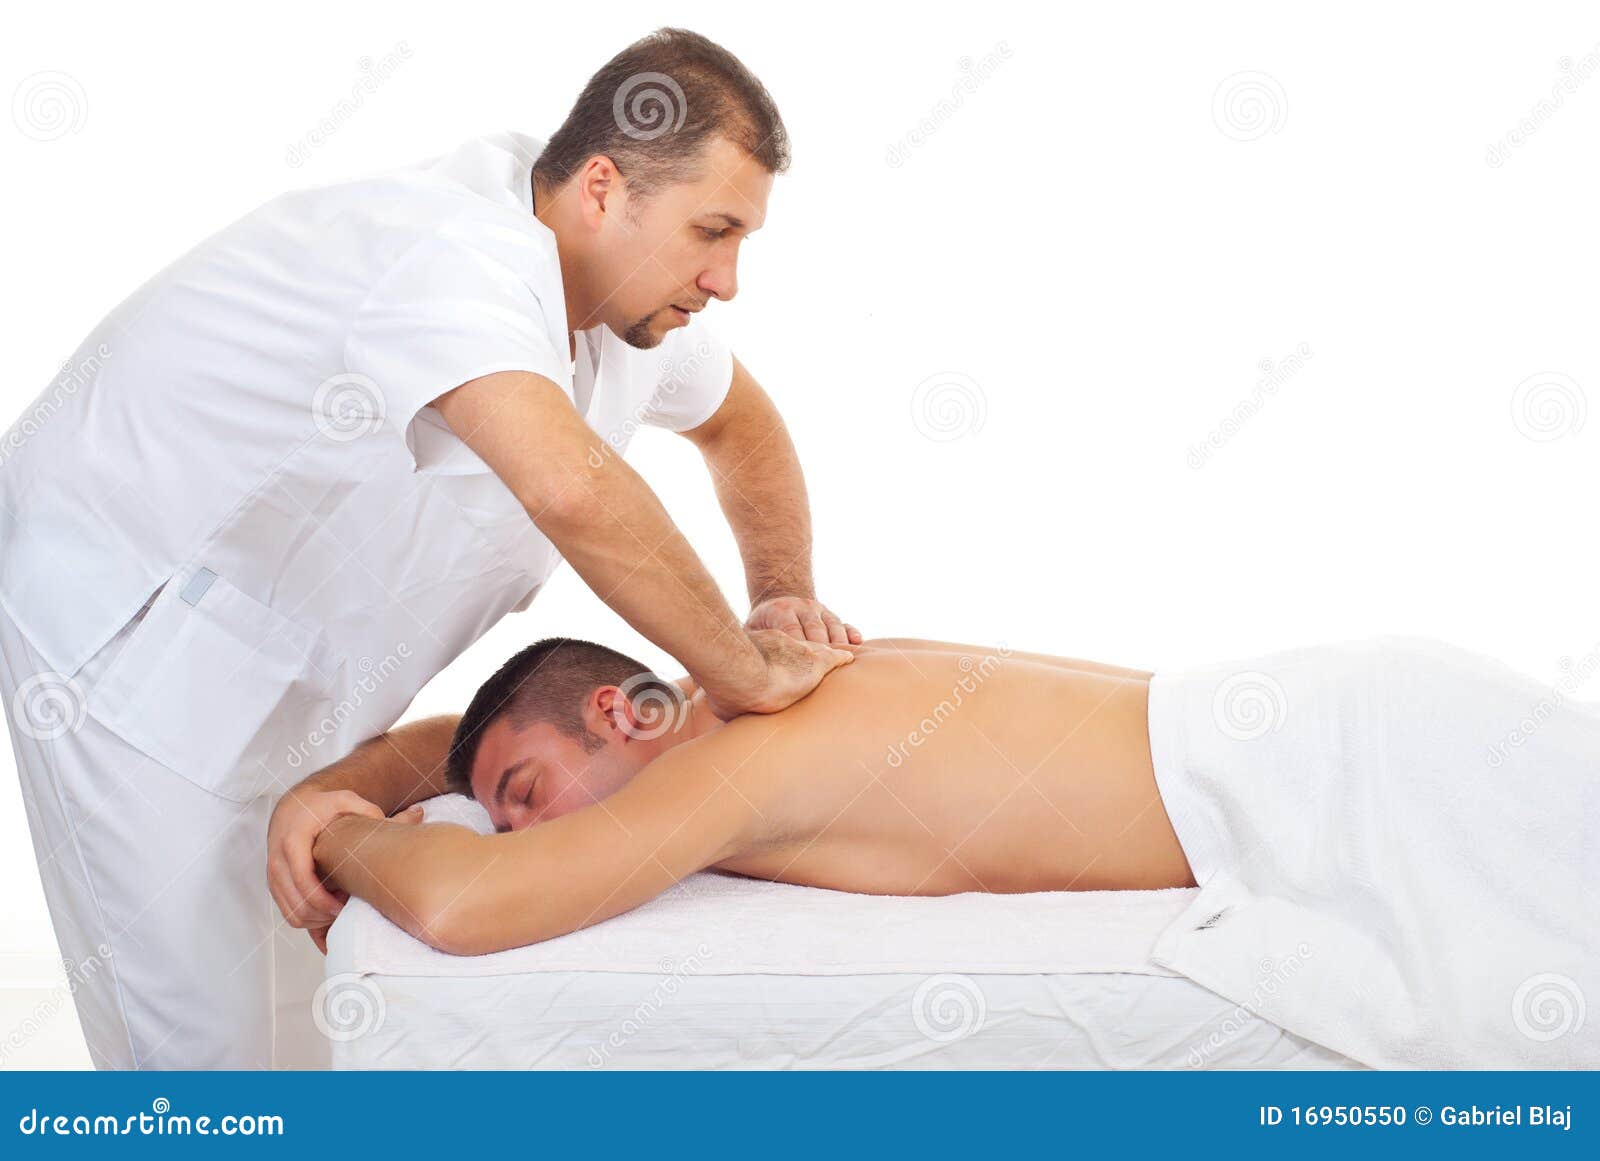 masseur massaging man back at spa